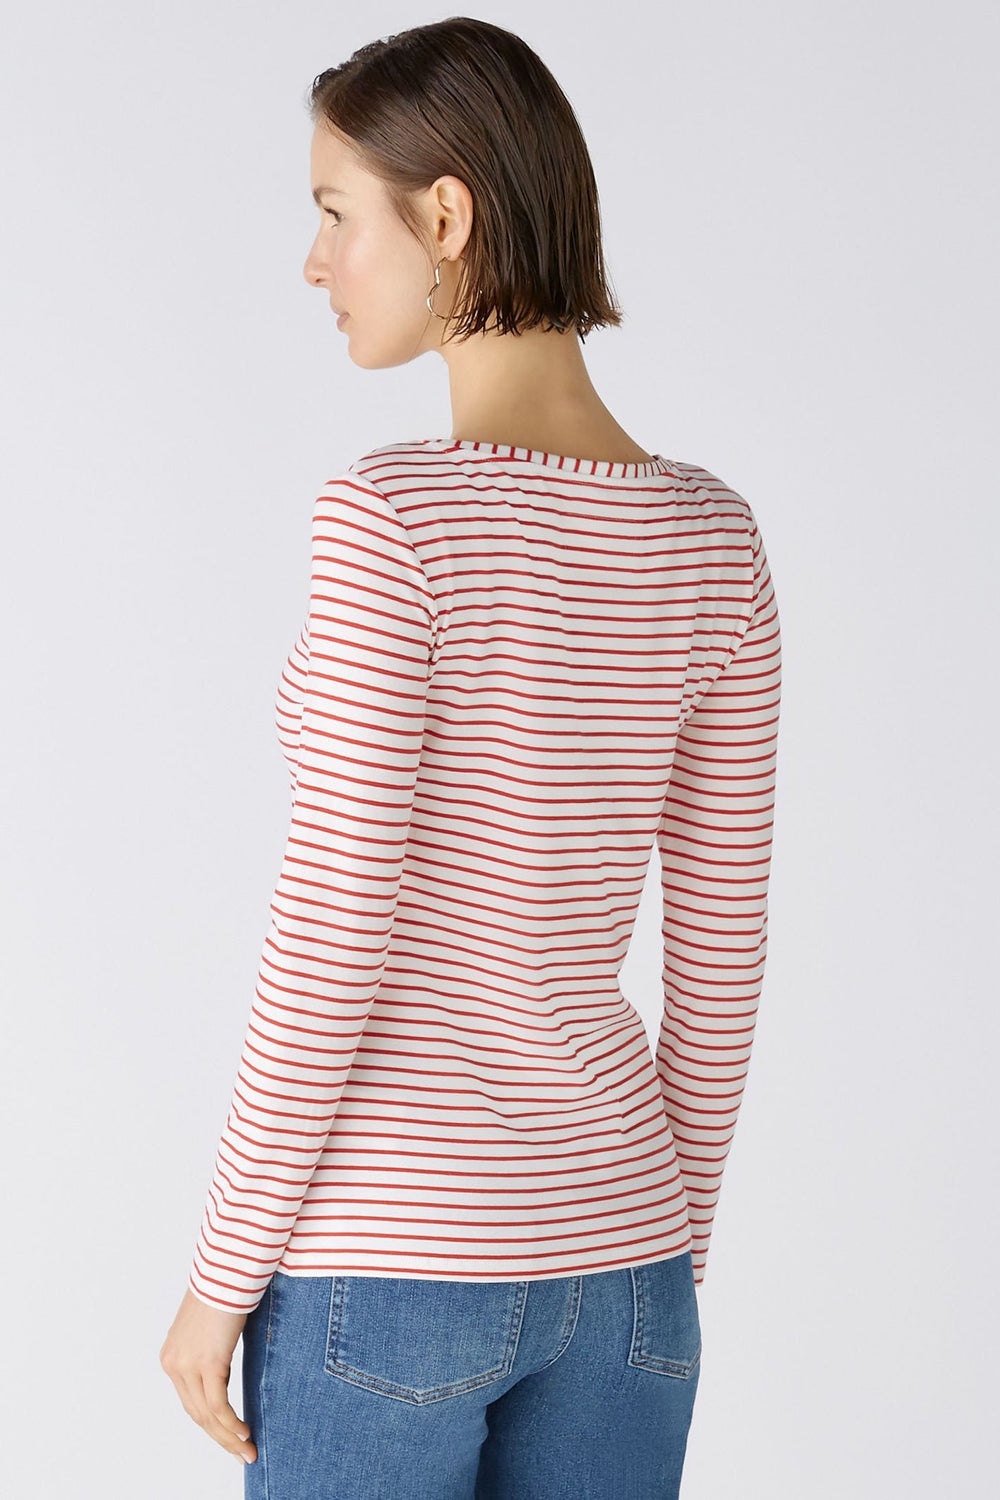 Oui 88220 White Red Sumiko Striped Long Sleeve Top - Olivia Grace Fashion